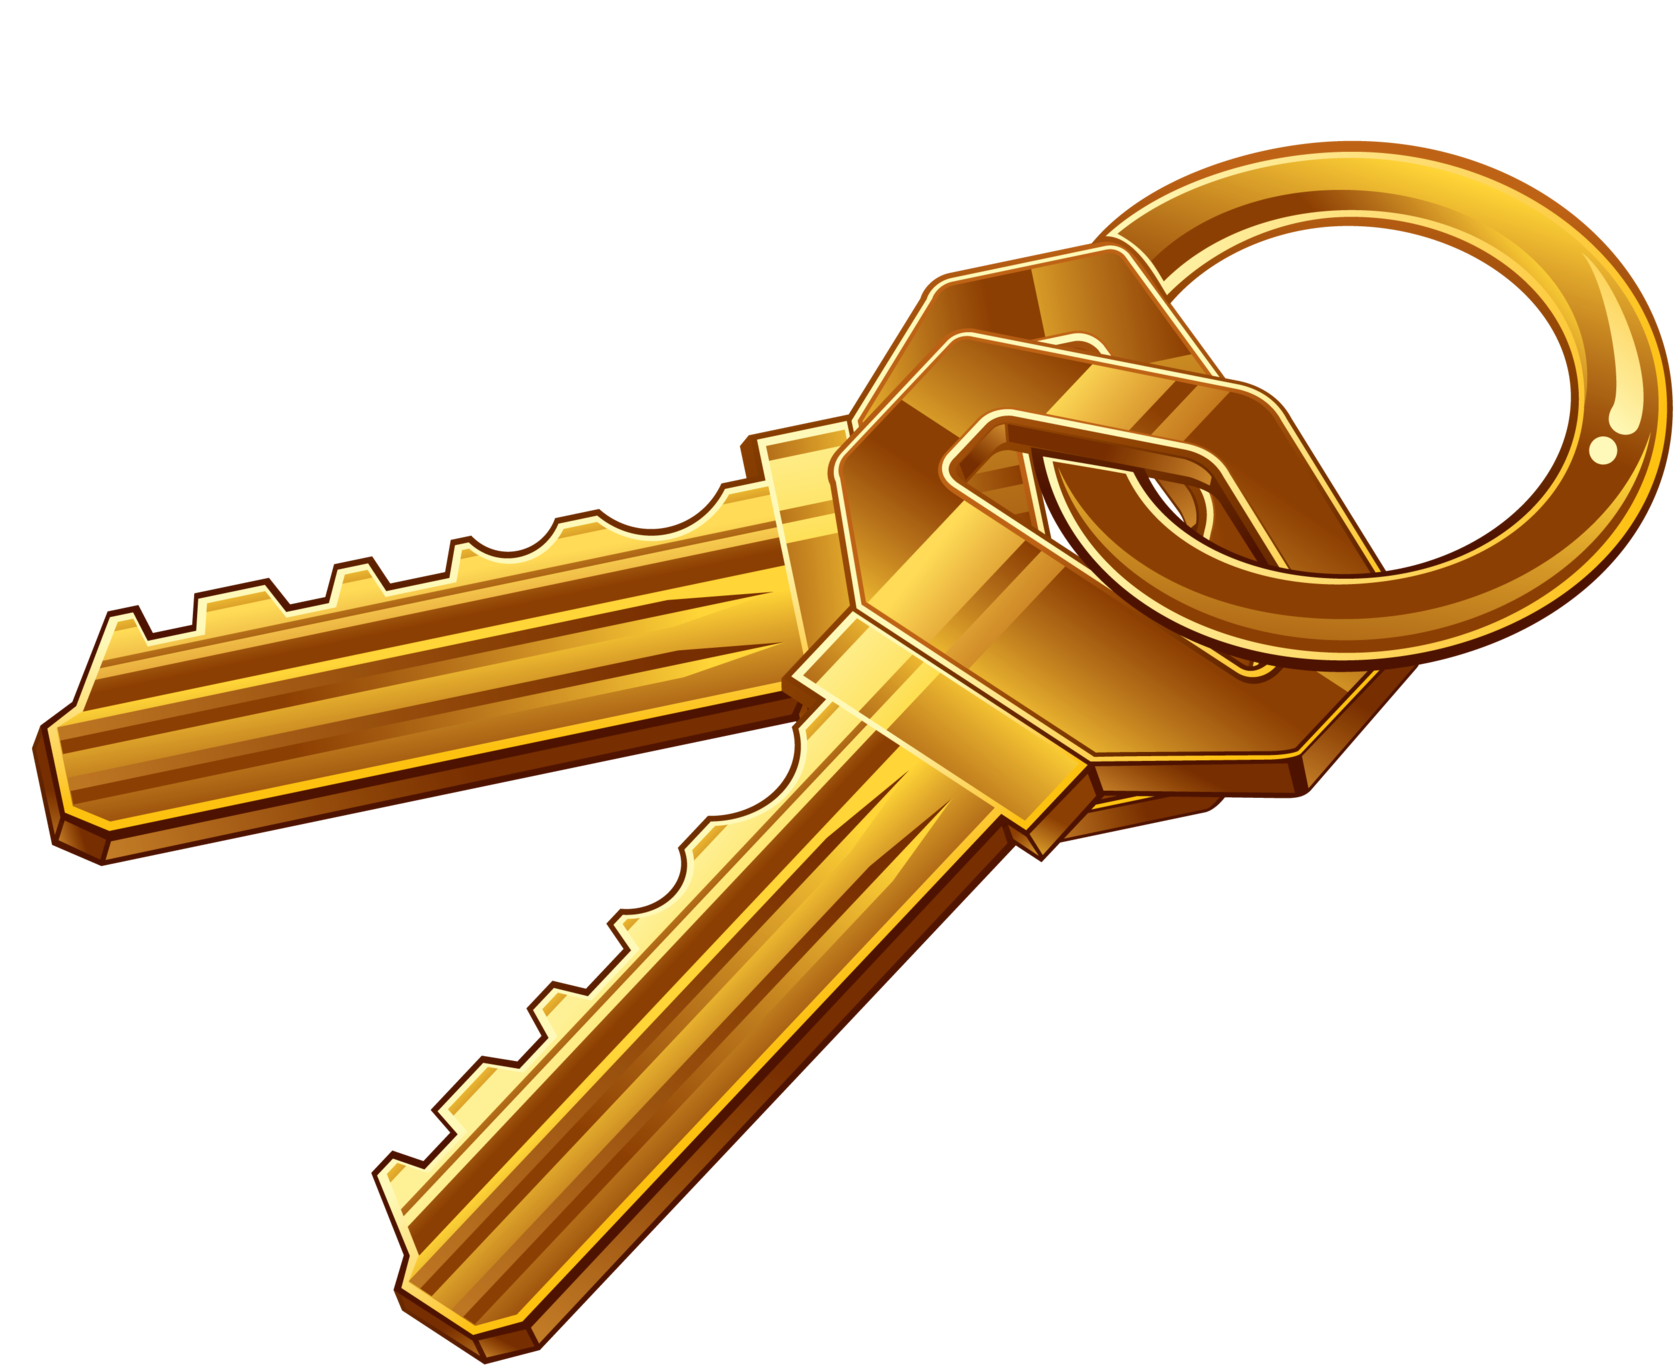 Keys picture. Ключ. Связка ключей. Ключ клипарт на прозрачном фоне. Золотой ключ.